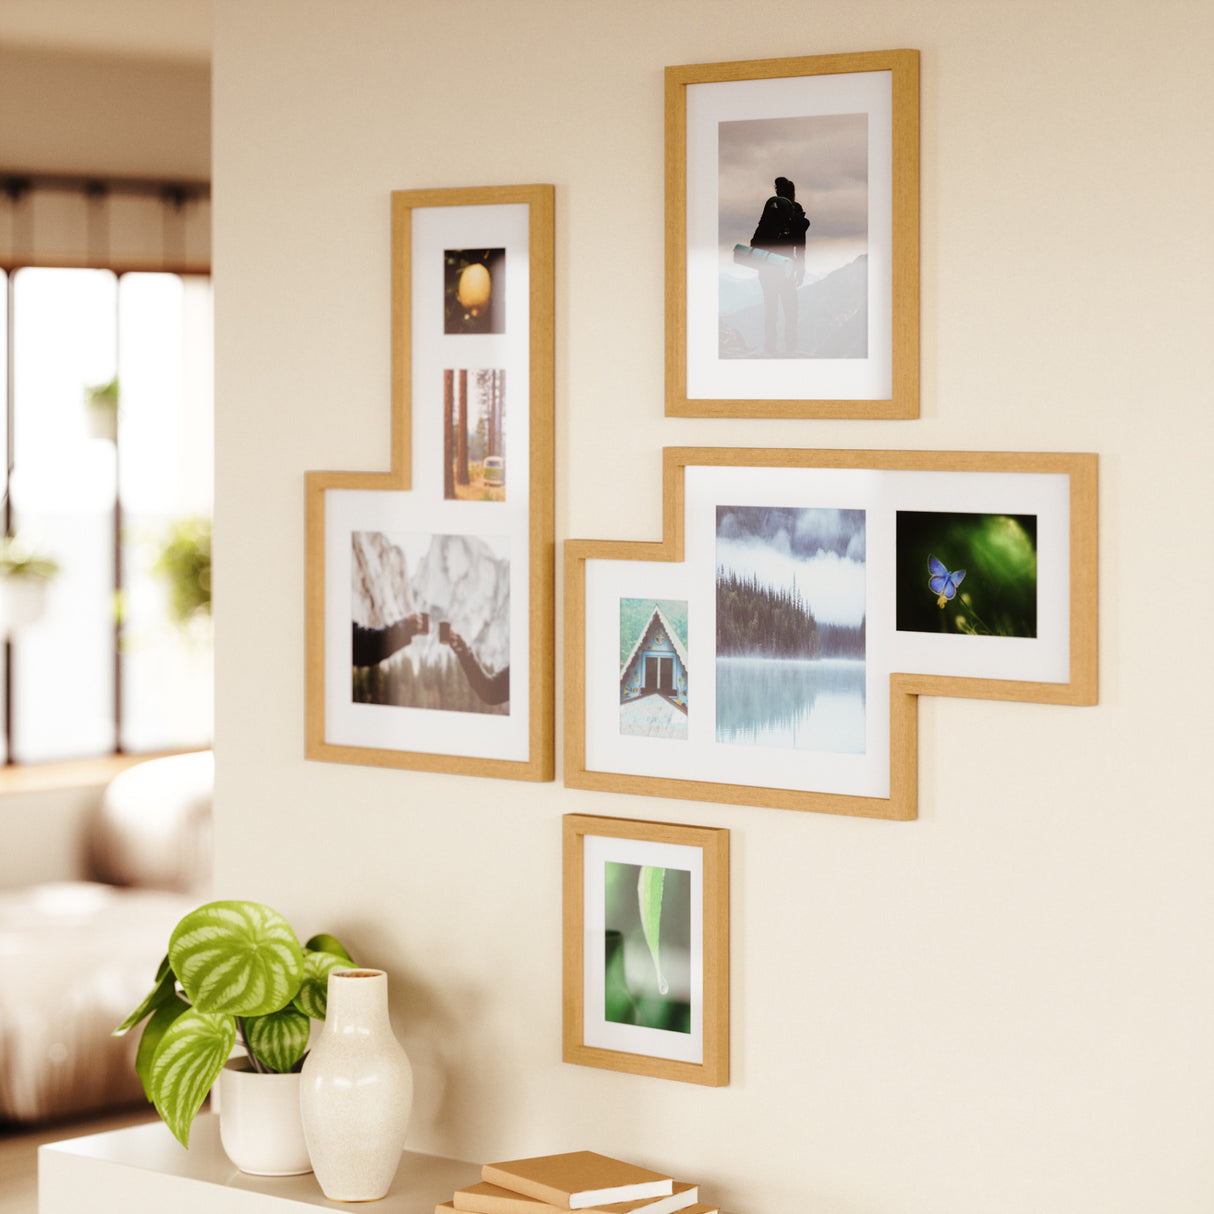 Wall Frames | color: Natural | Hover